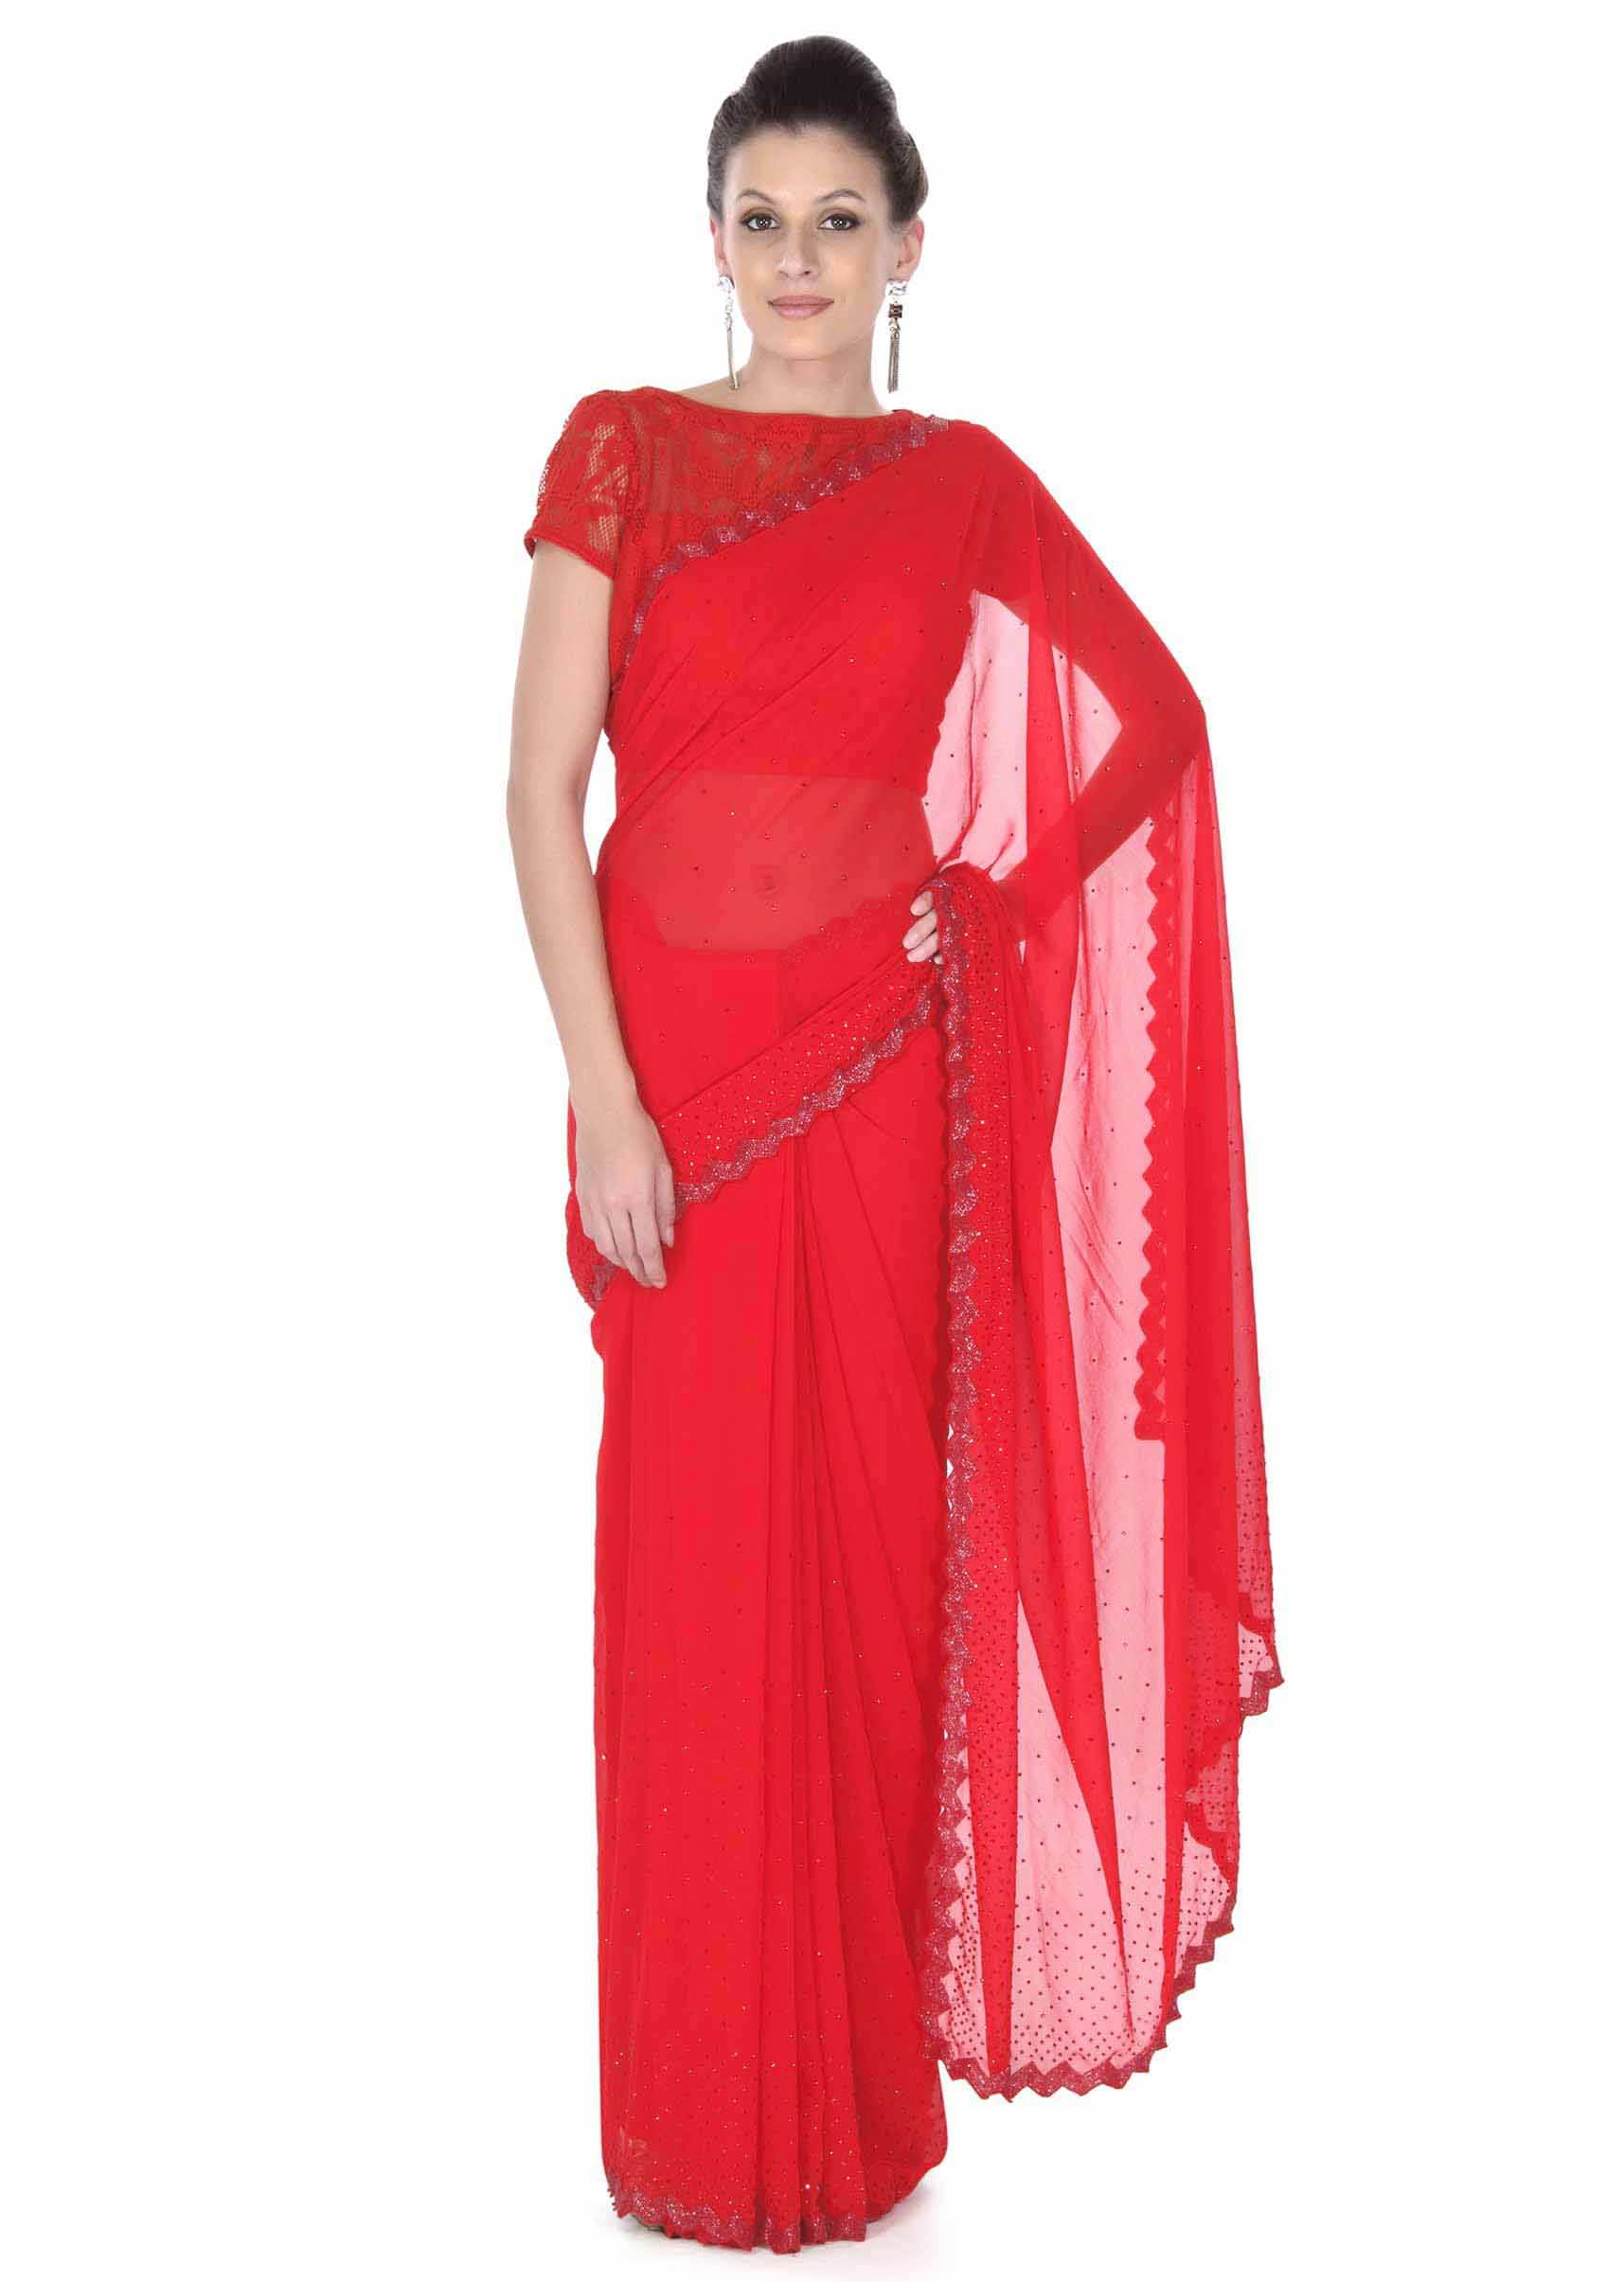 Red Saree With Kundan And Cut Dana Embroidered Border Online - Kalki Fashion